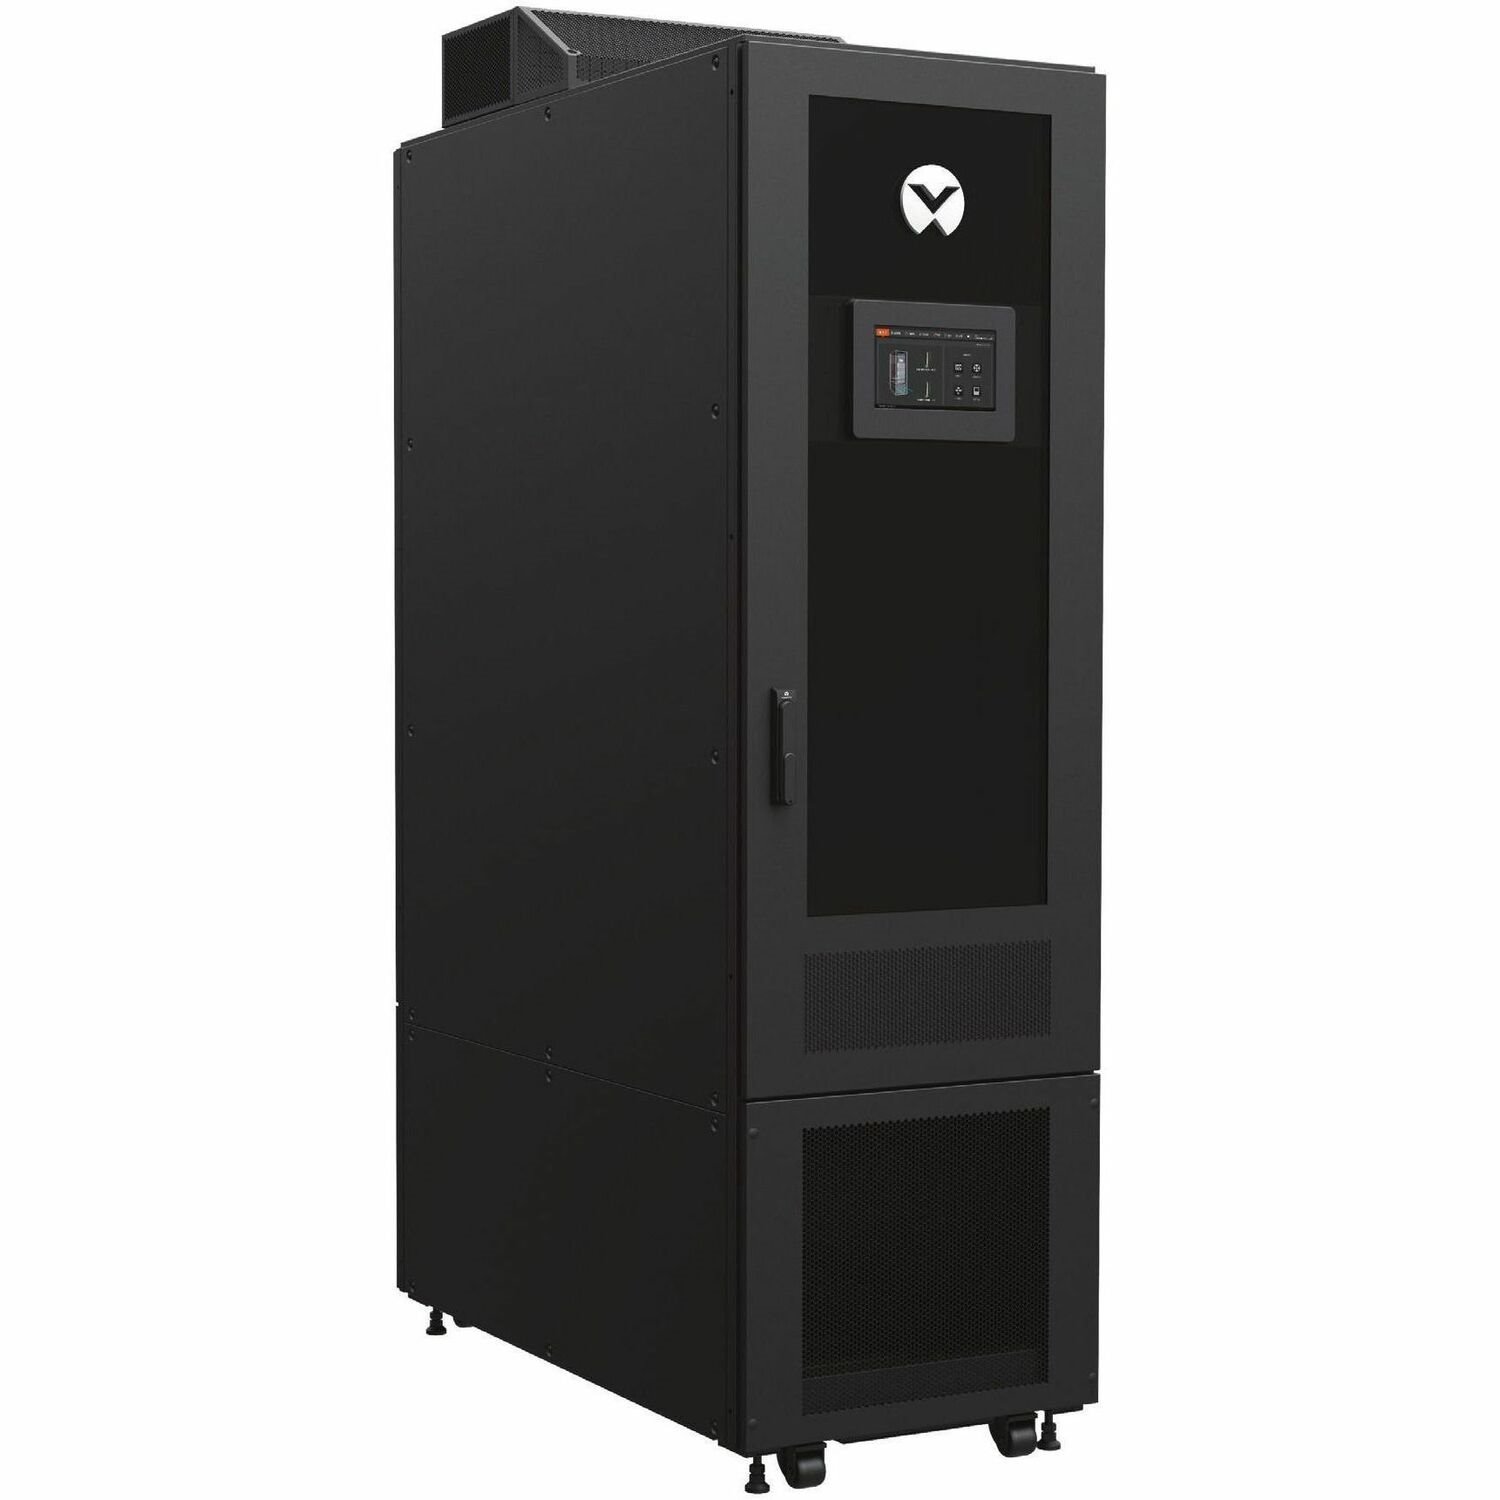 VERTIV SmartCabinet 2-E 24U Enclosed Cabinet Rack Cabinet for IT Equipment